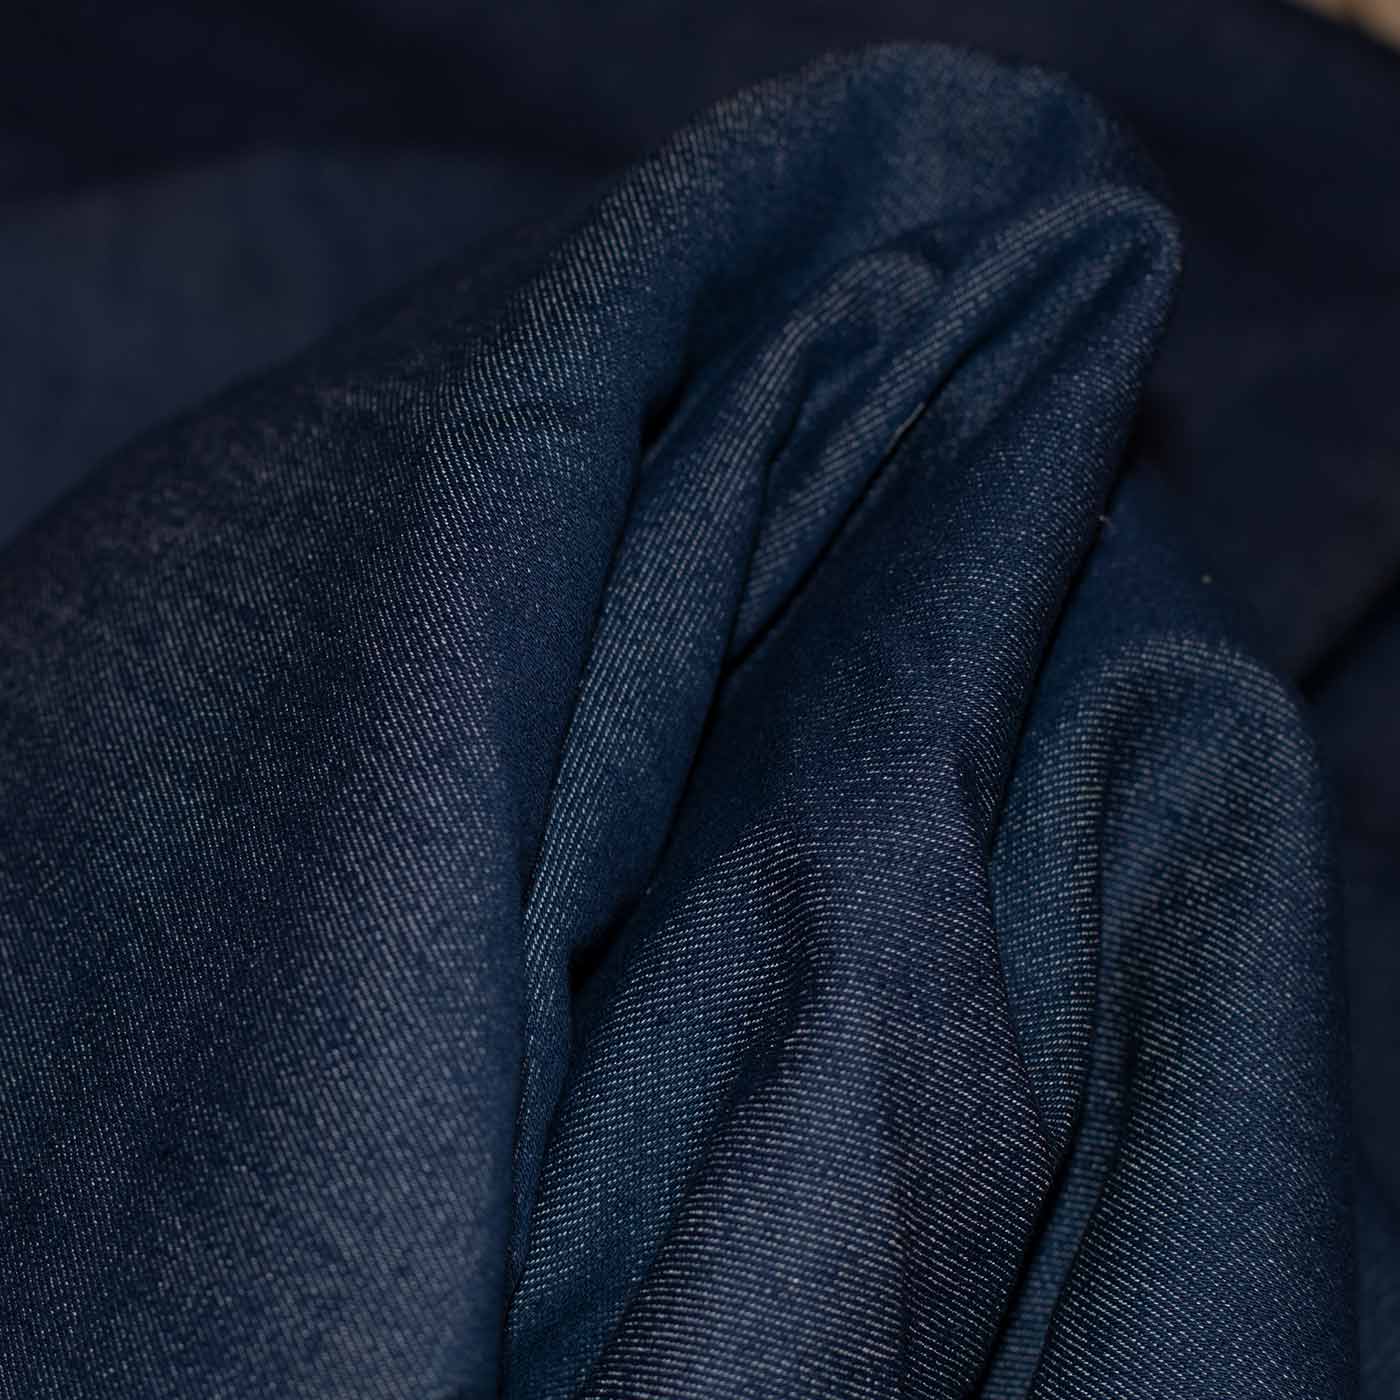 Solid Blue Denim Fabric